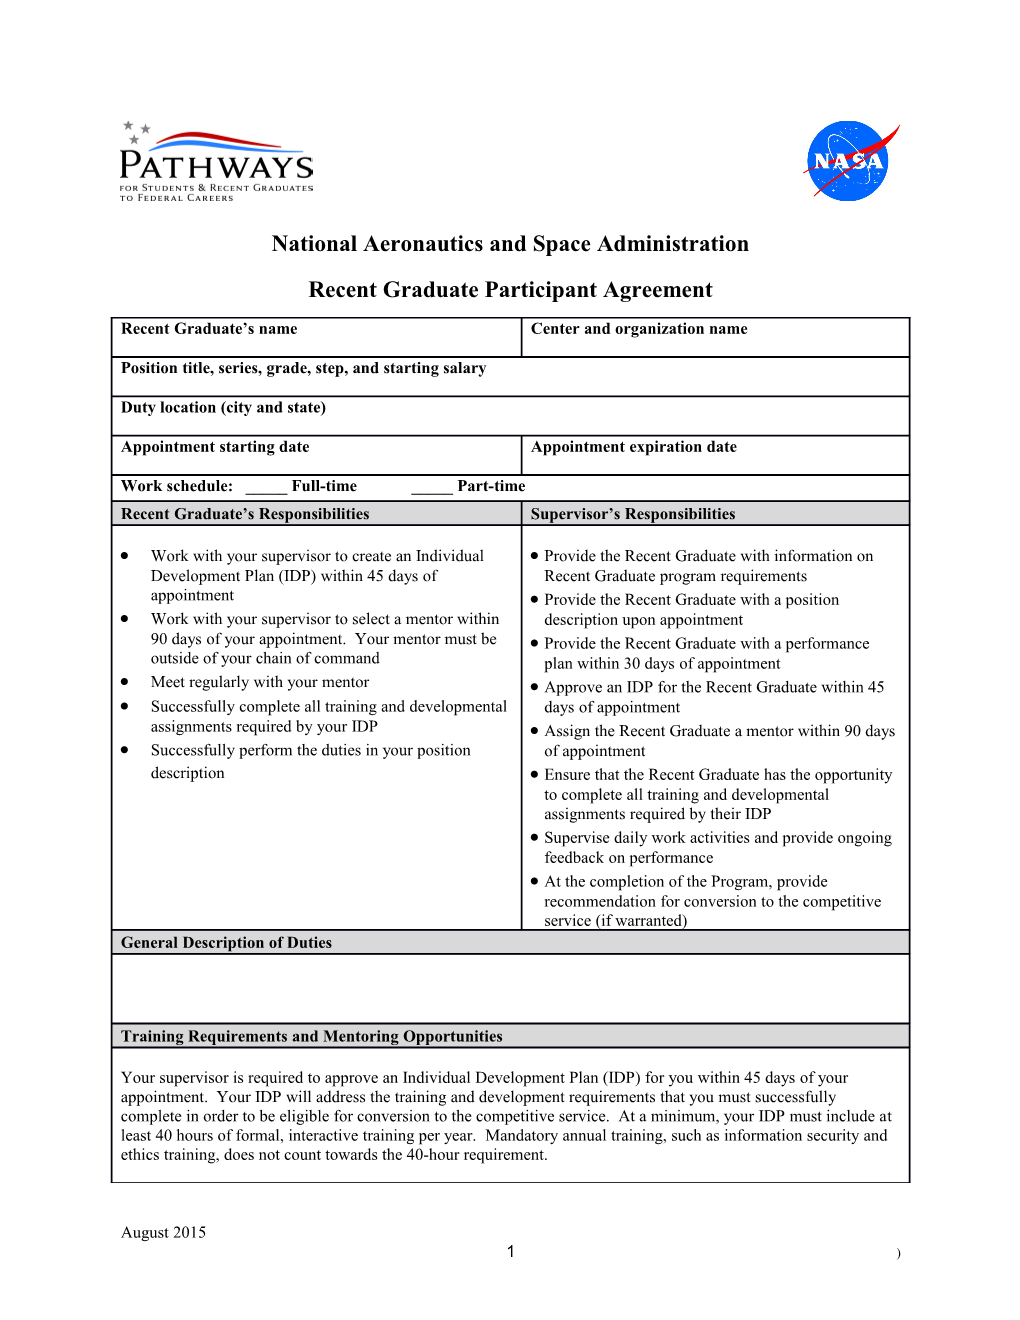 NASA Recent Graduate Participant Agreement Template March 2015 Version